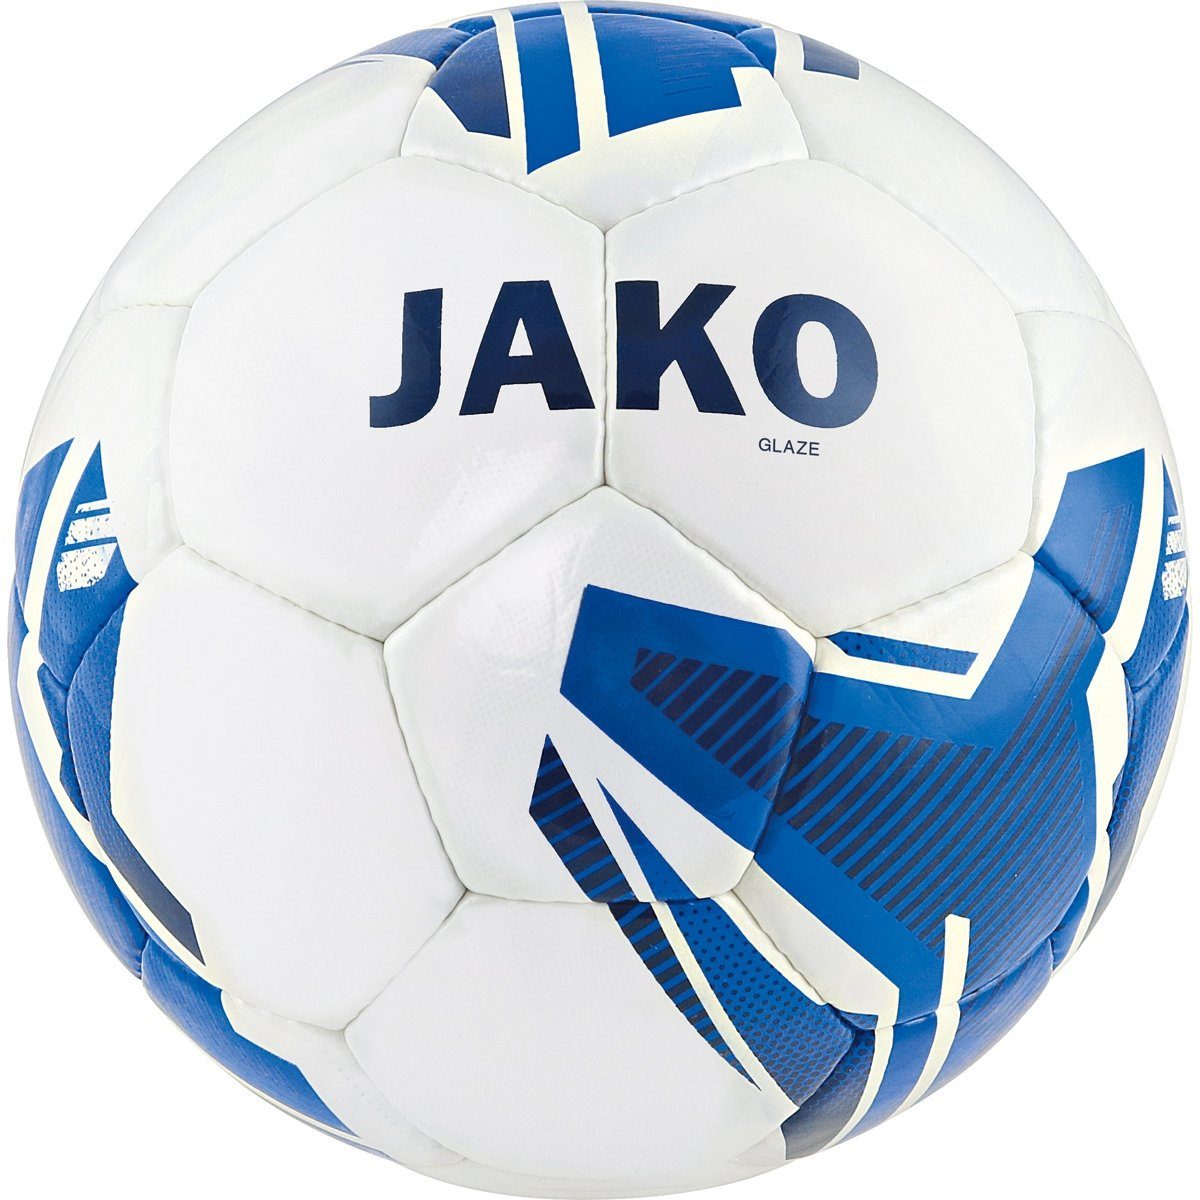 Jako weiß/JAKO Fußball blau-290g